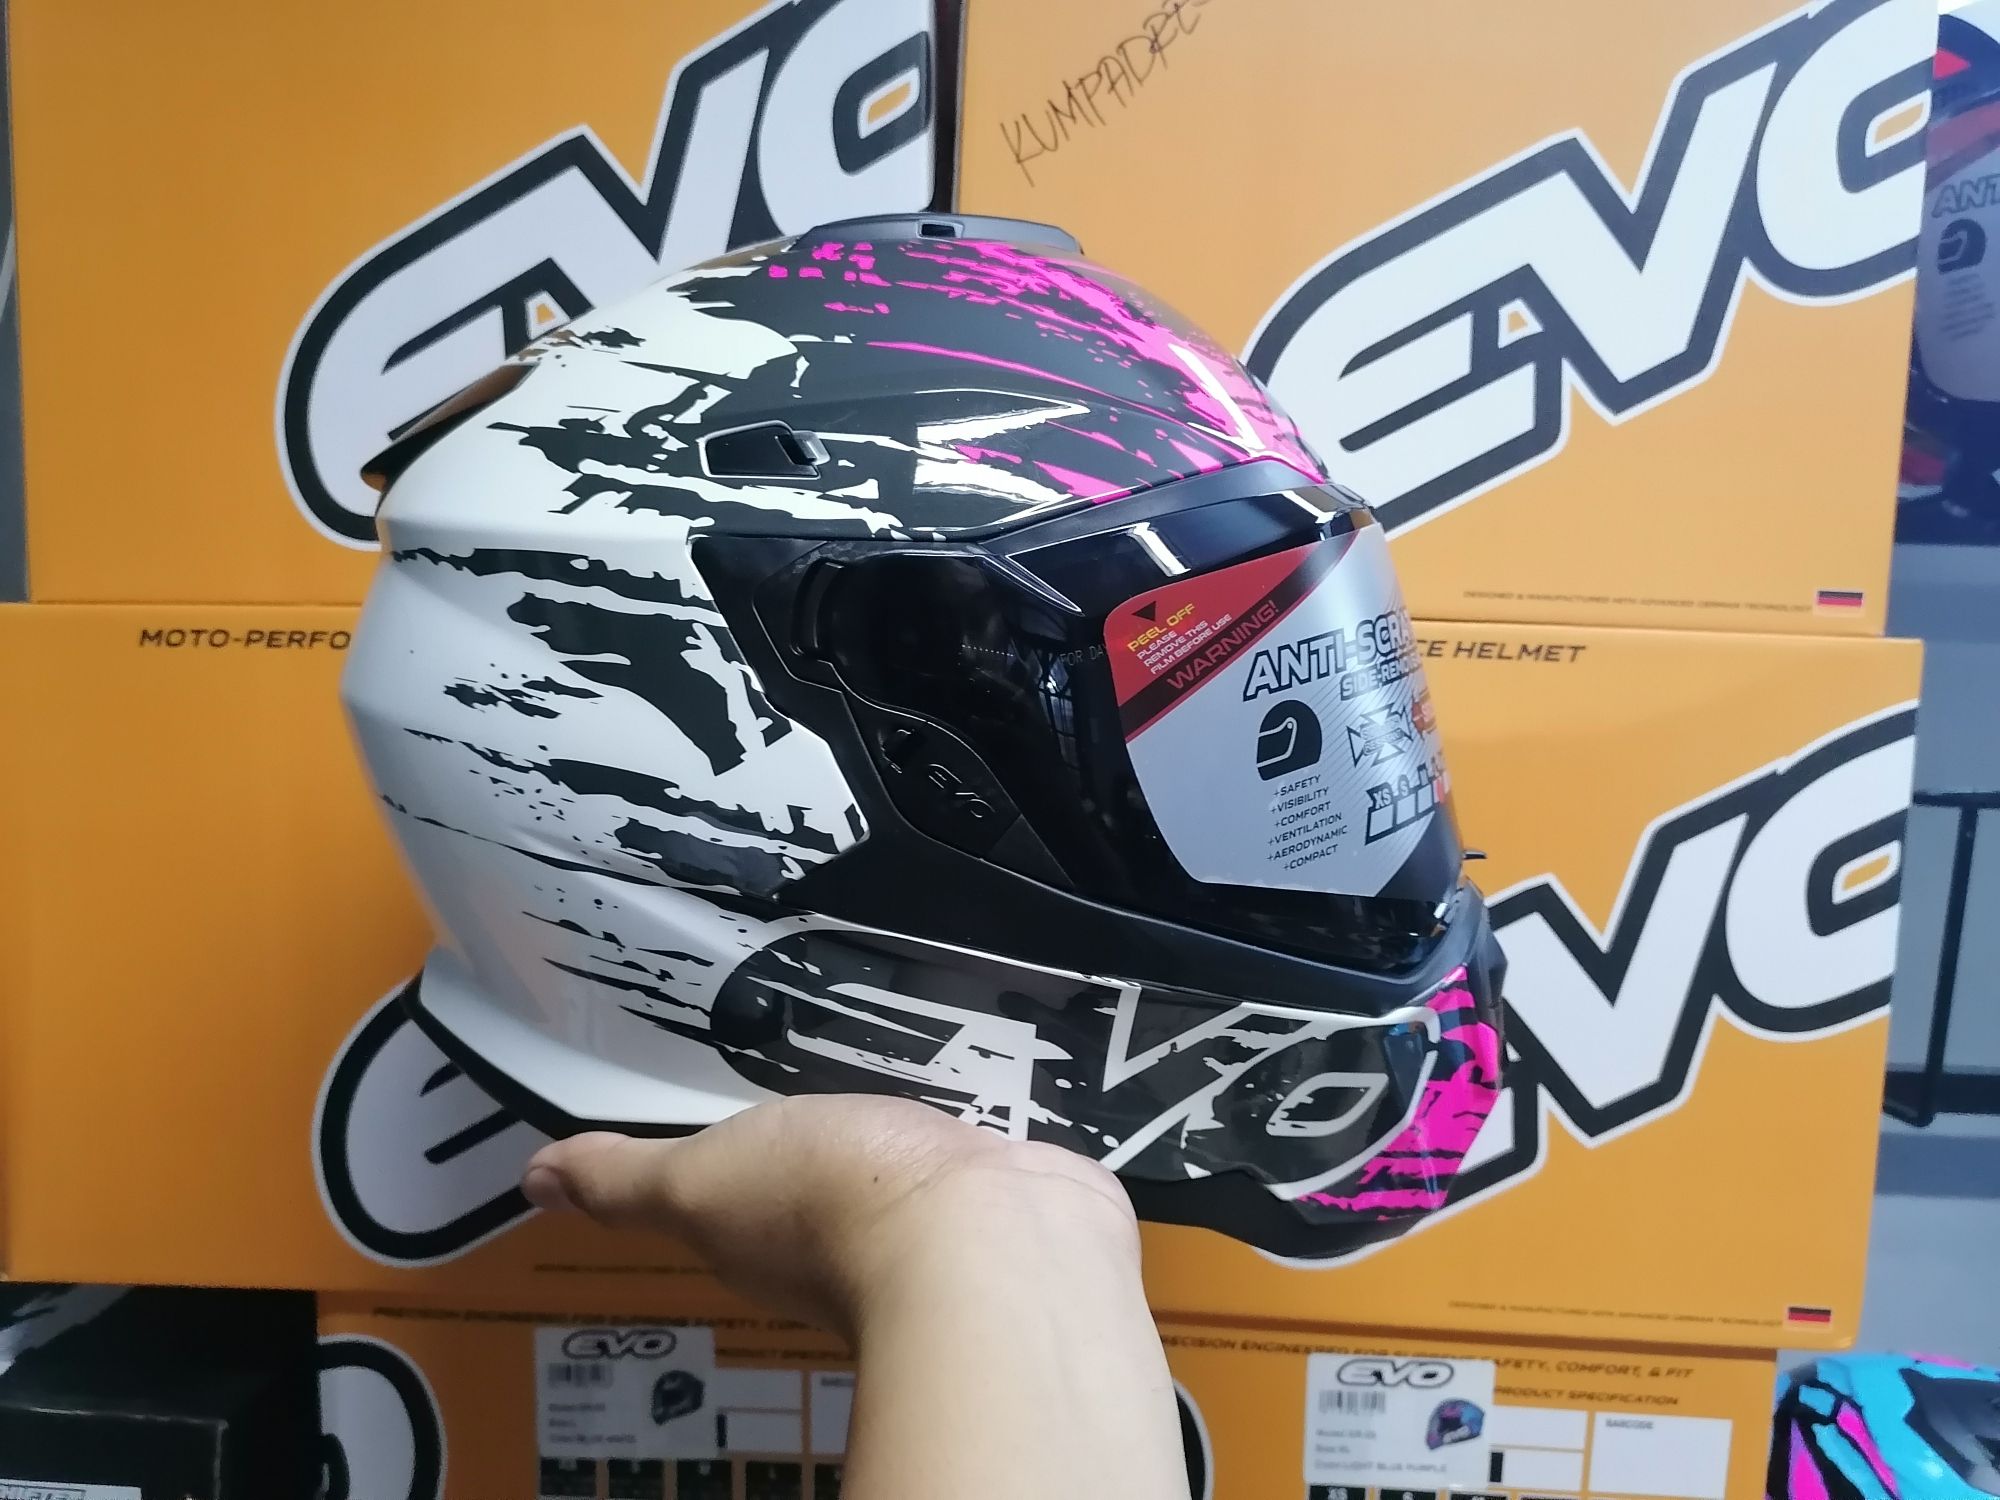 Dx 7 Evo Helmet Shop Dx 7 Evo Helmet With Great Discounts And Prices Online Lazada Philippines